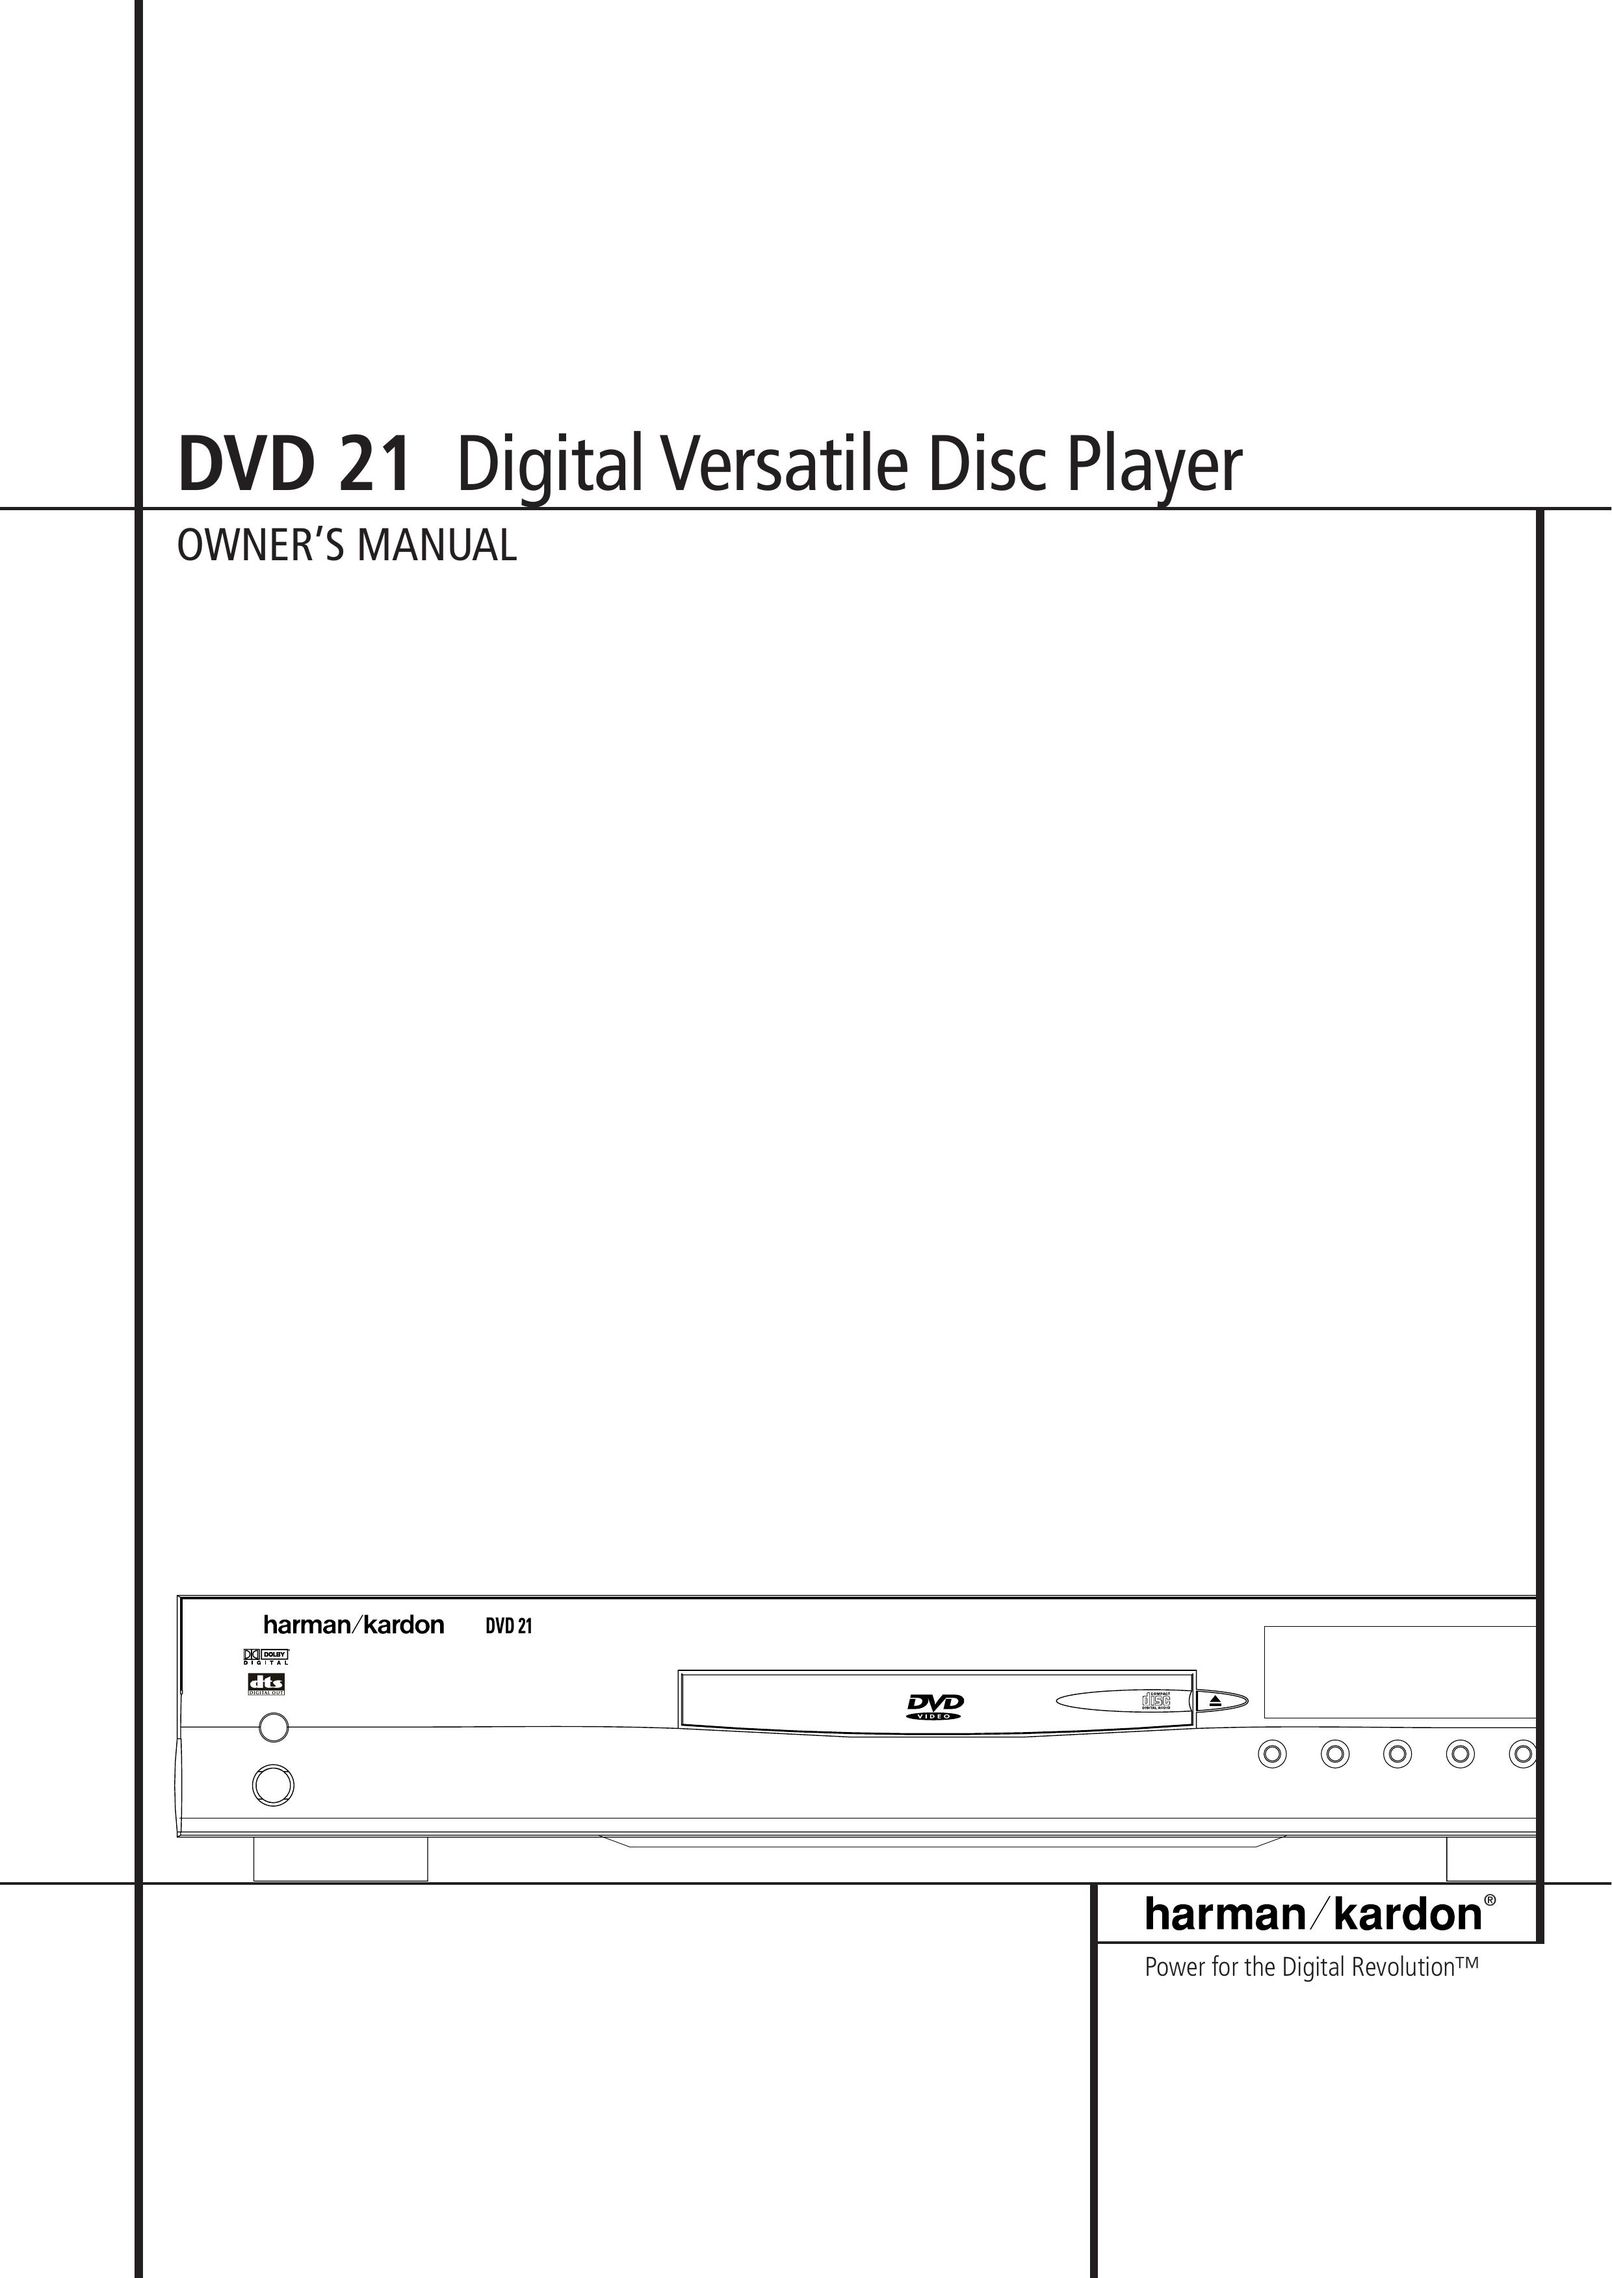 Harman-Kardon DVD 21 DVD Player User Manual